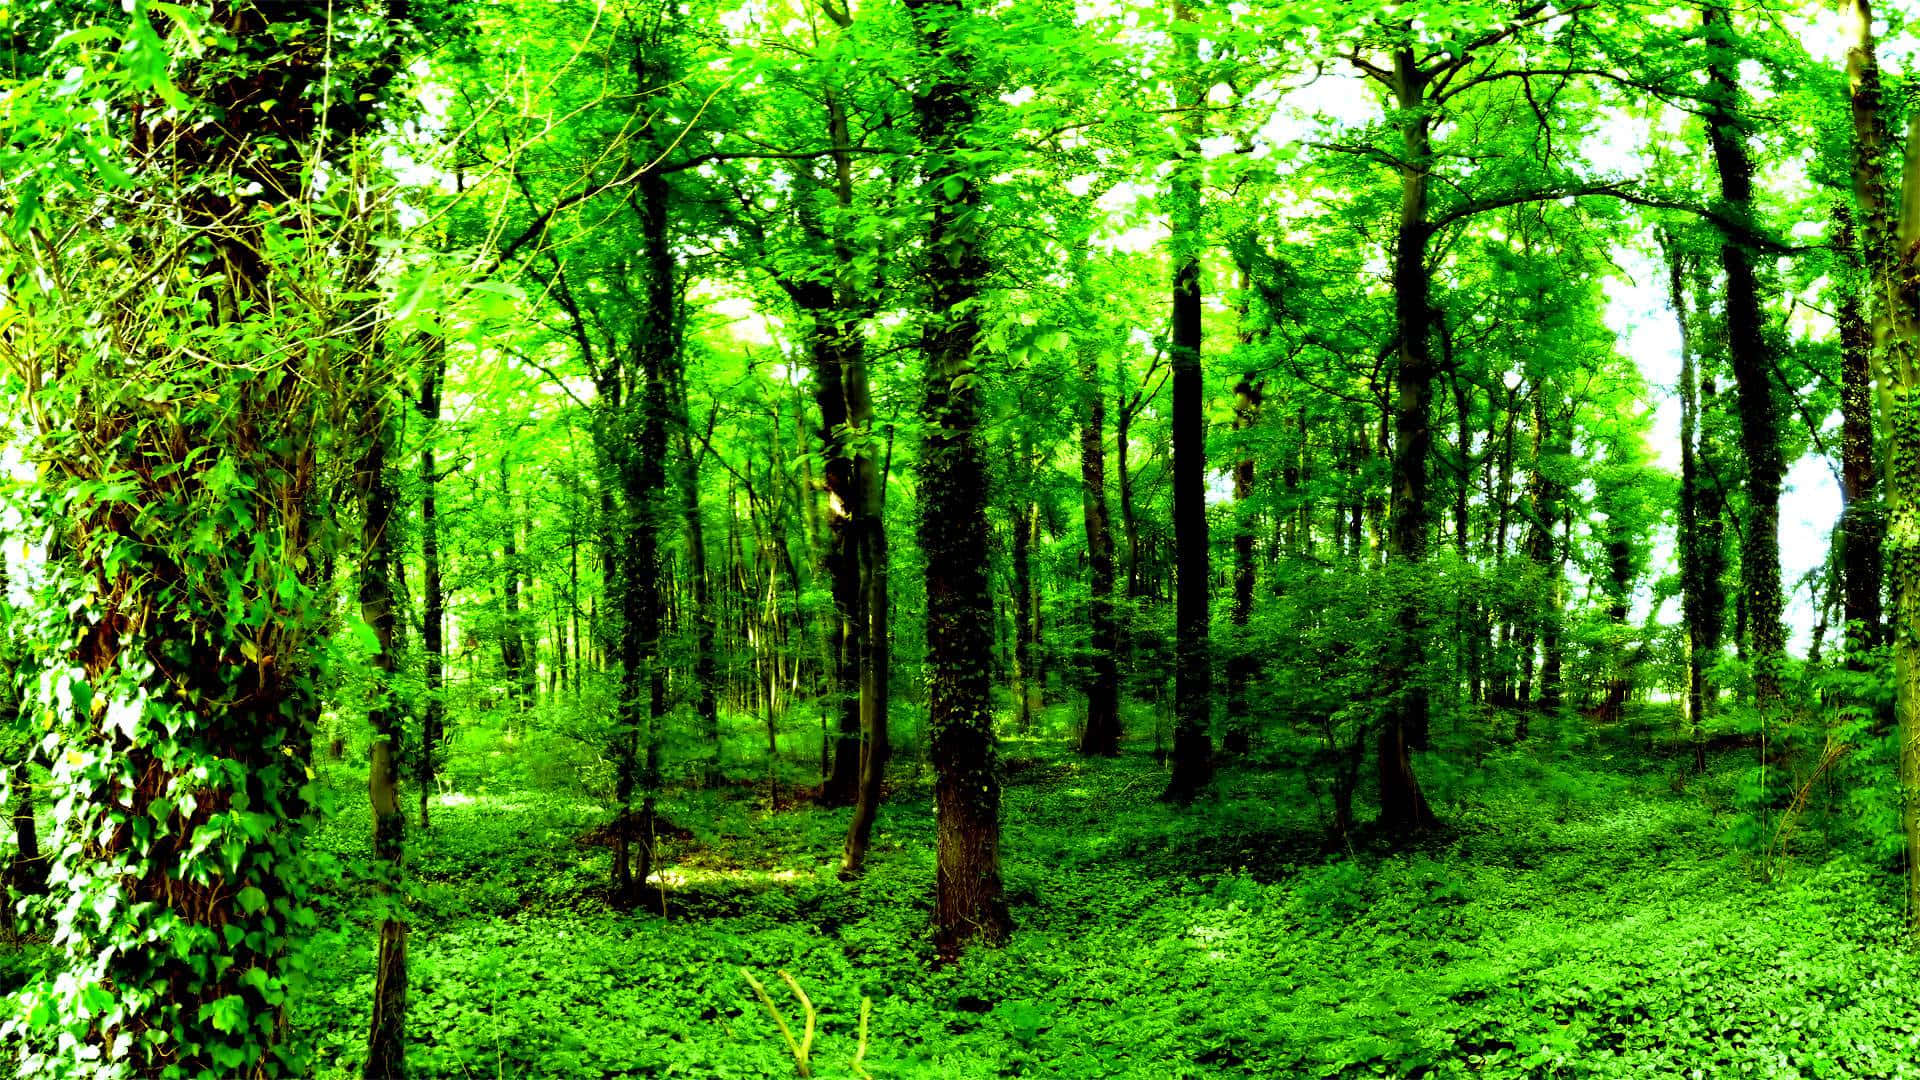 Nature’s Splendor - An Illuminated Forest Green Scene